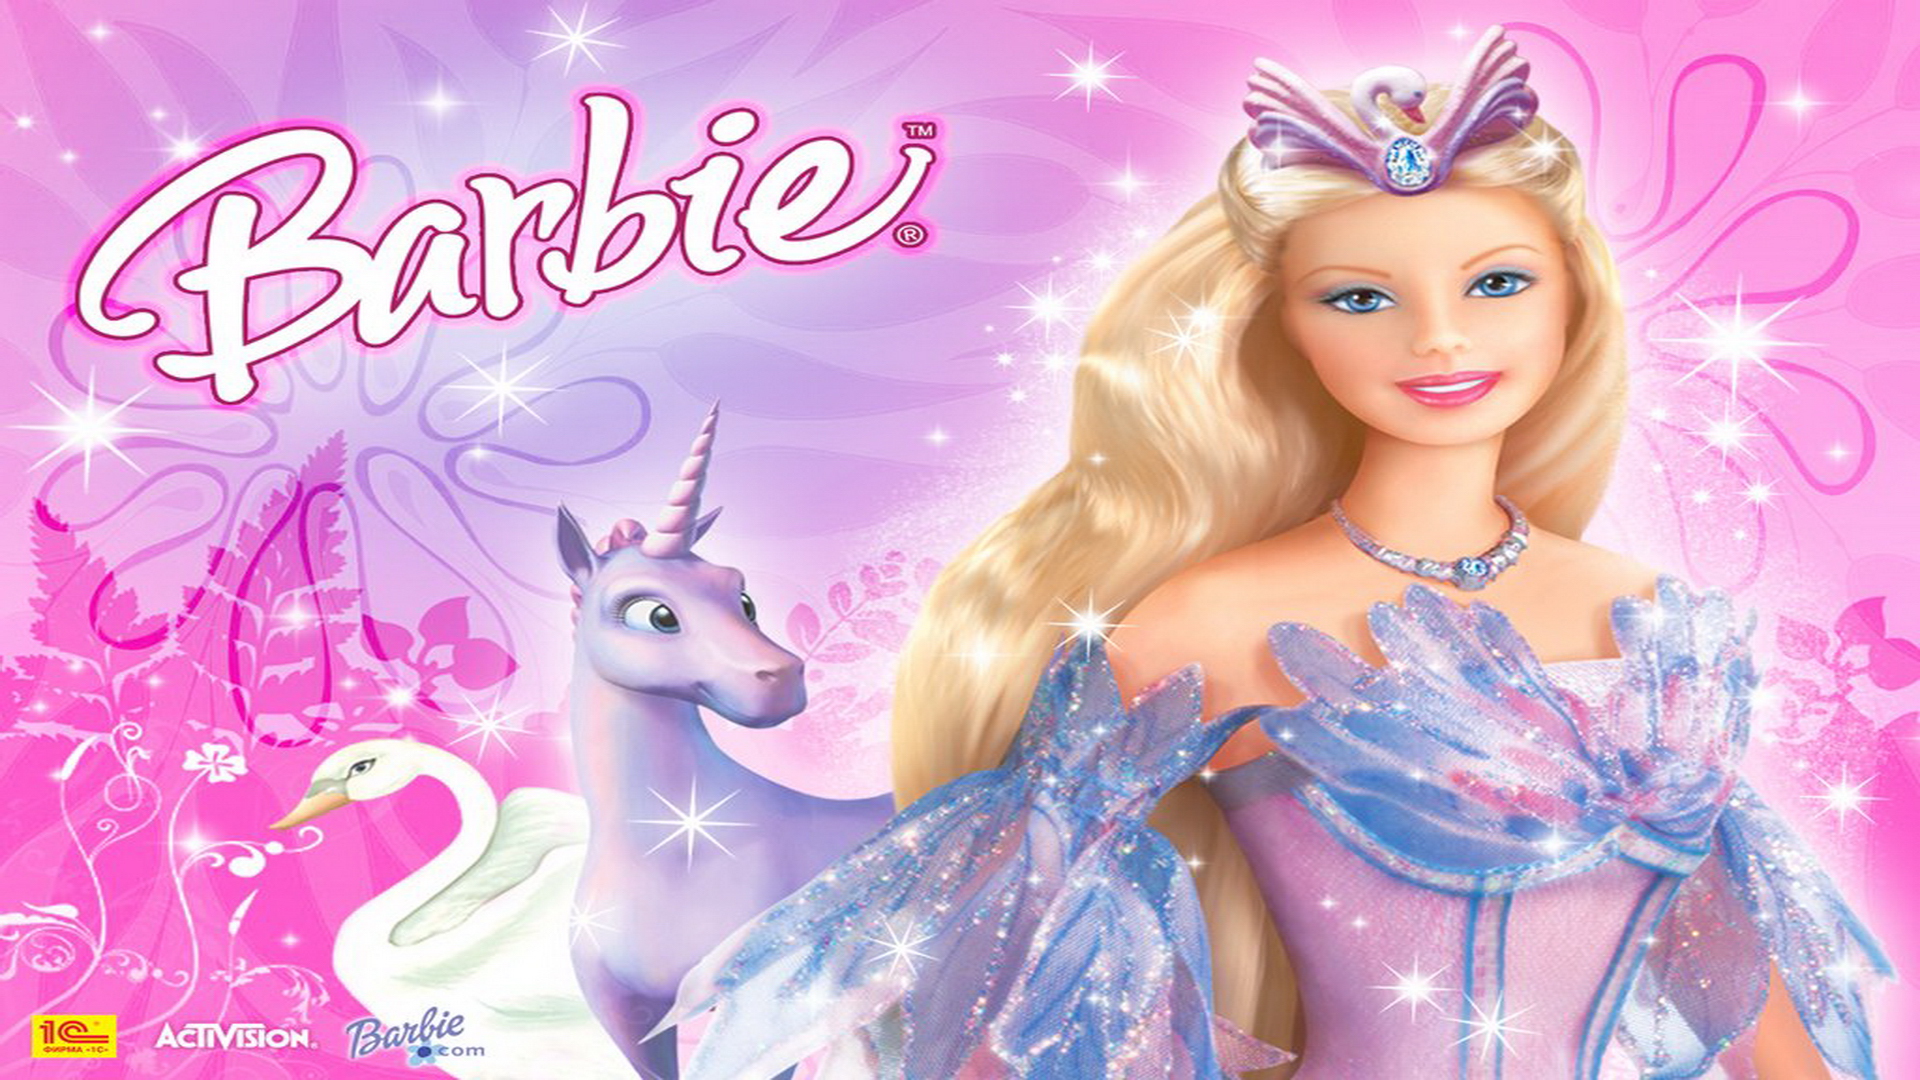 Pics Photos 3d Barbie Wallpaper For Desktop